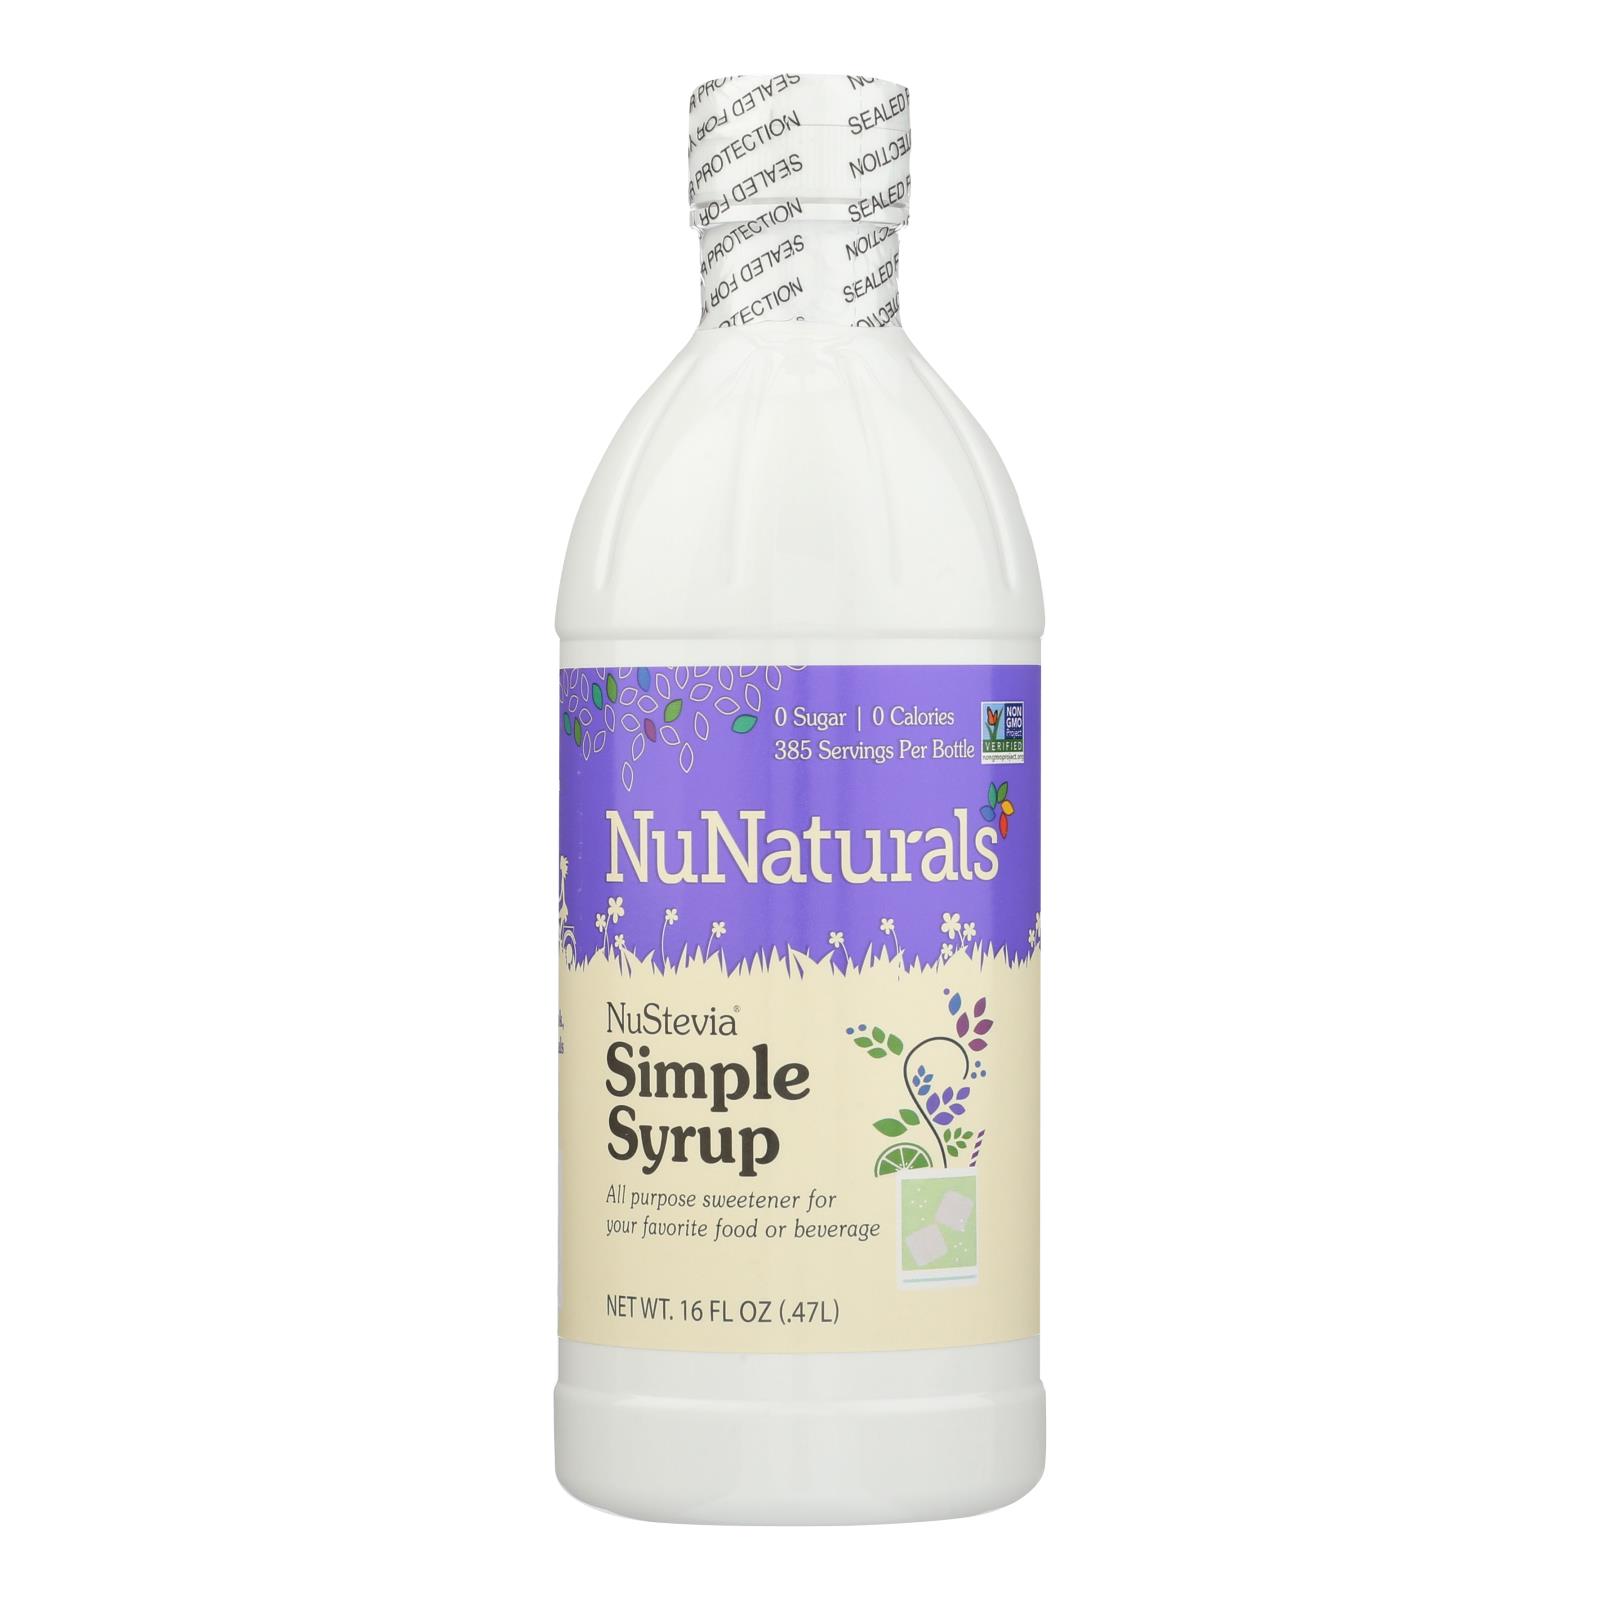 Nunaturals Nustevia Simple Syrup All Purpose Sweetener - 1 Each - 16 OZ